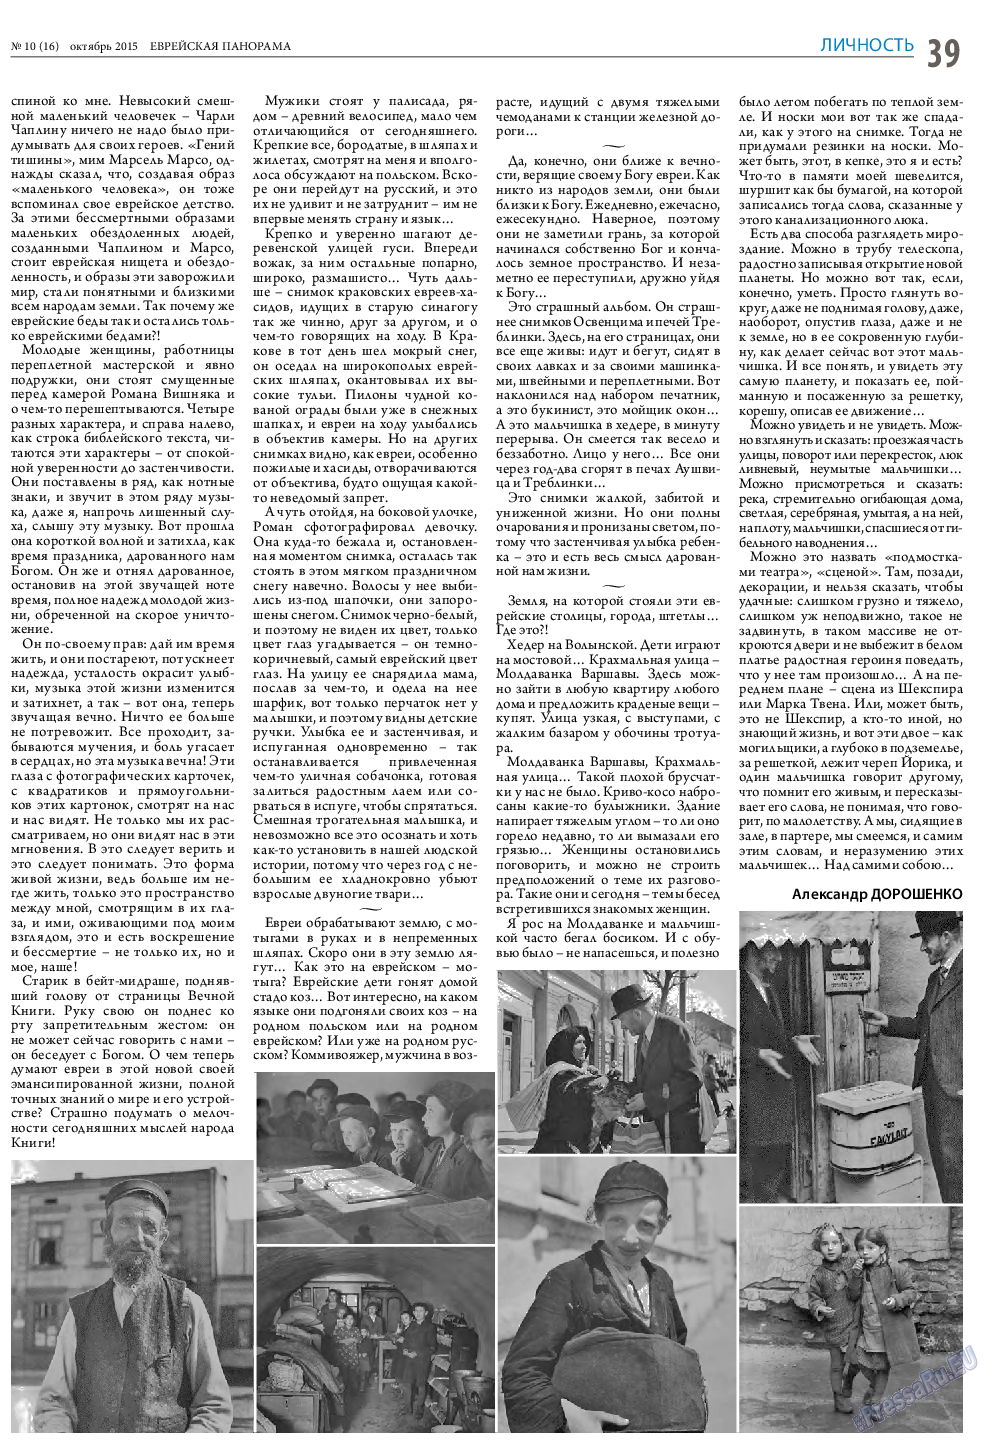 Еврейская панорама, газета. 2015 №10 стр.39